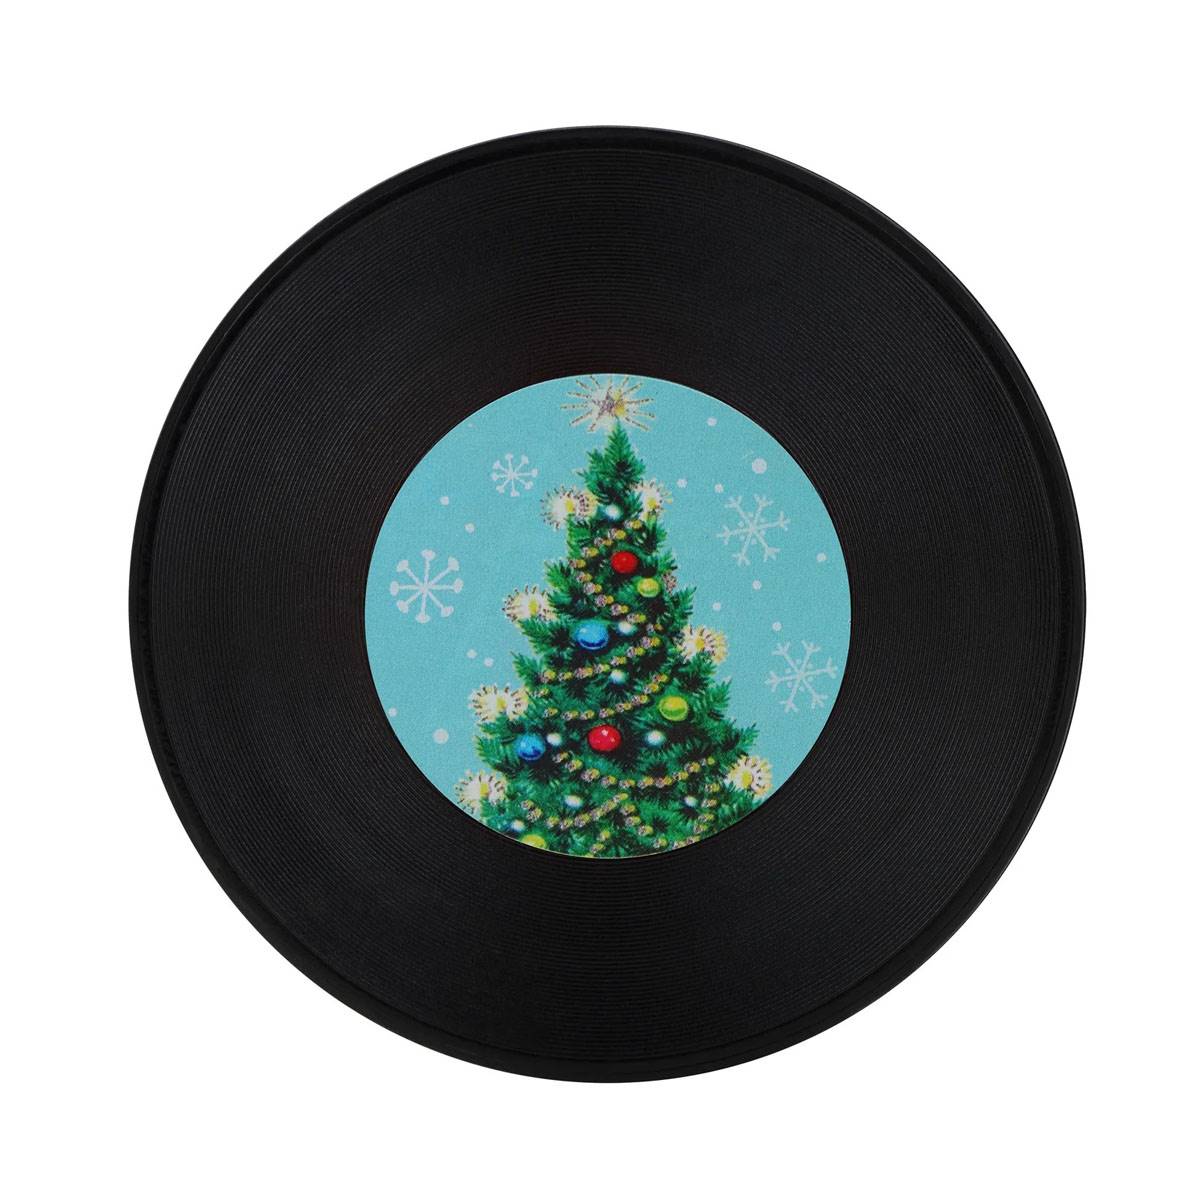 Mr. Christmas Jingle Bell Rock Mini Record Christmas Ornament